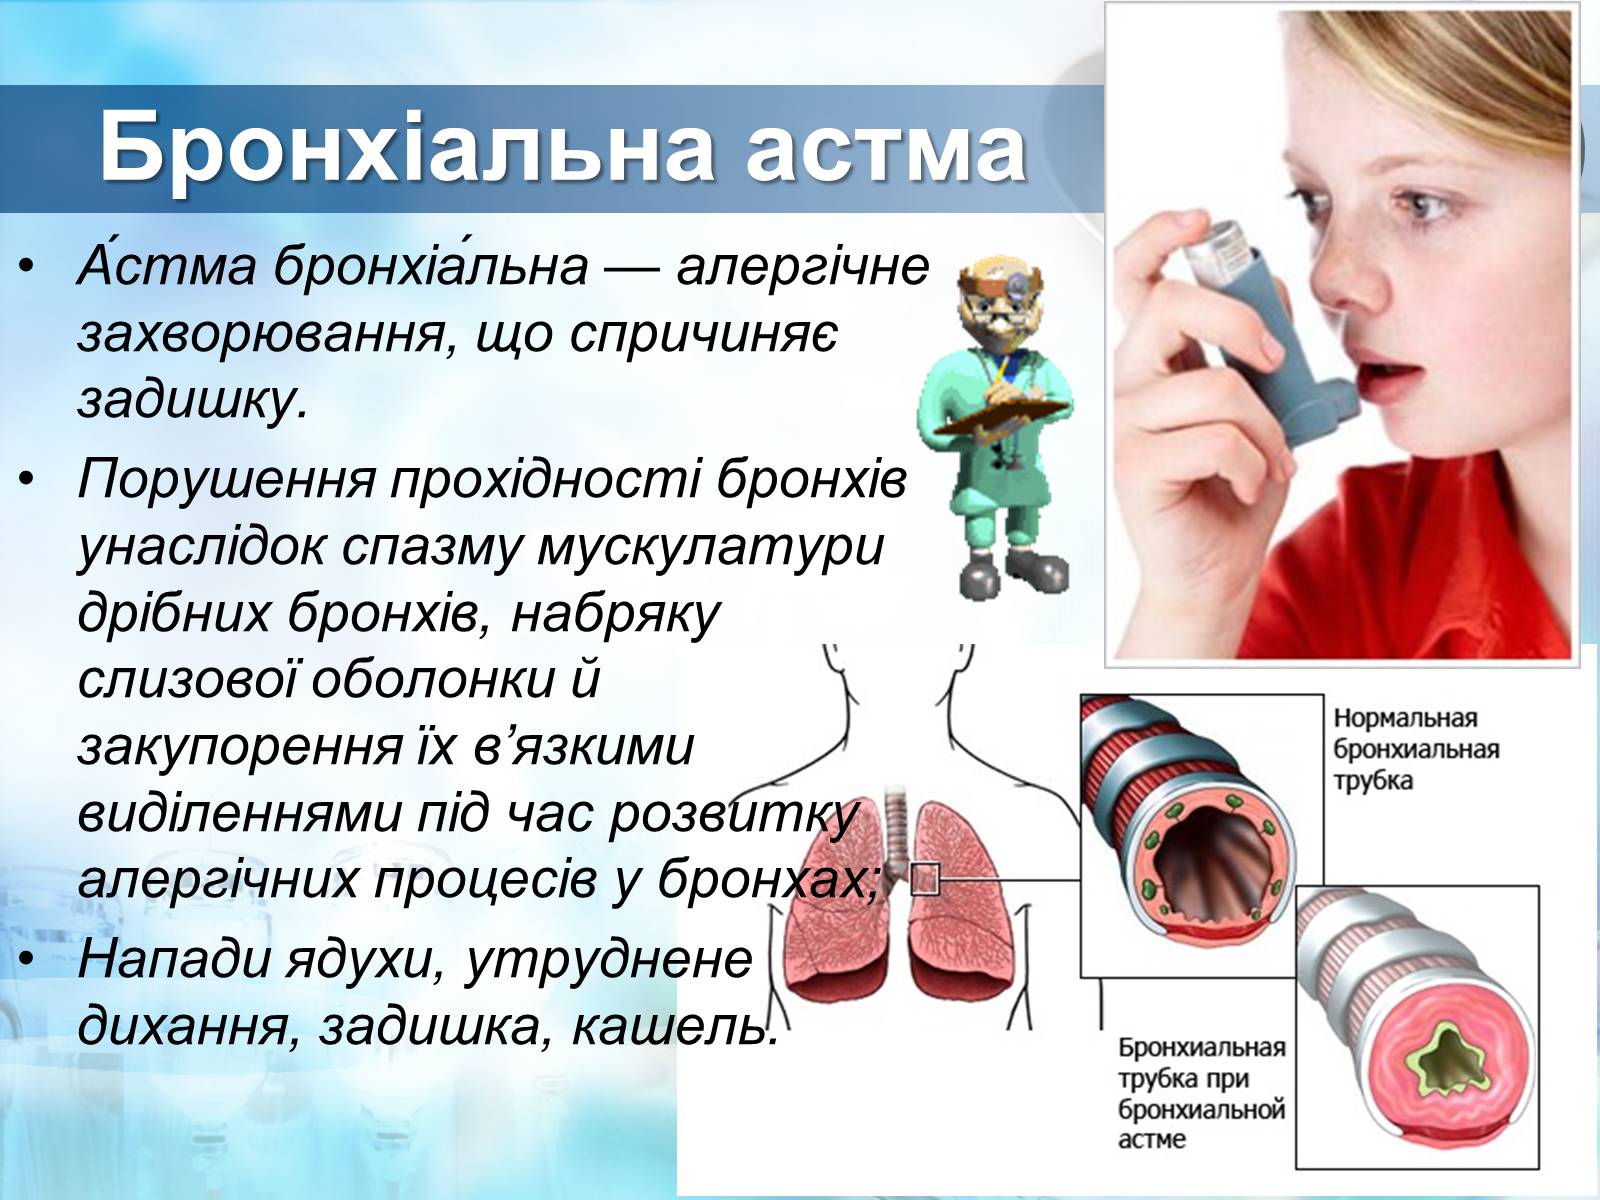 Bronchial asthma. Бронхиальная астма. Заболевания органов дыхания бронхиальная астма. Аллергическая бронхиальная астма.